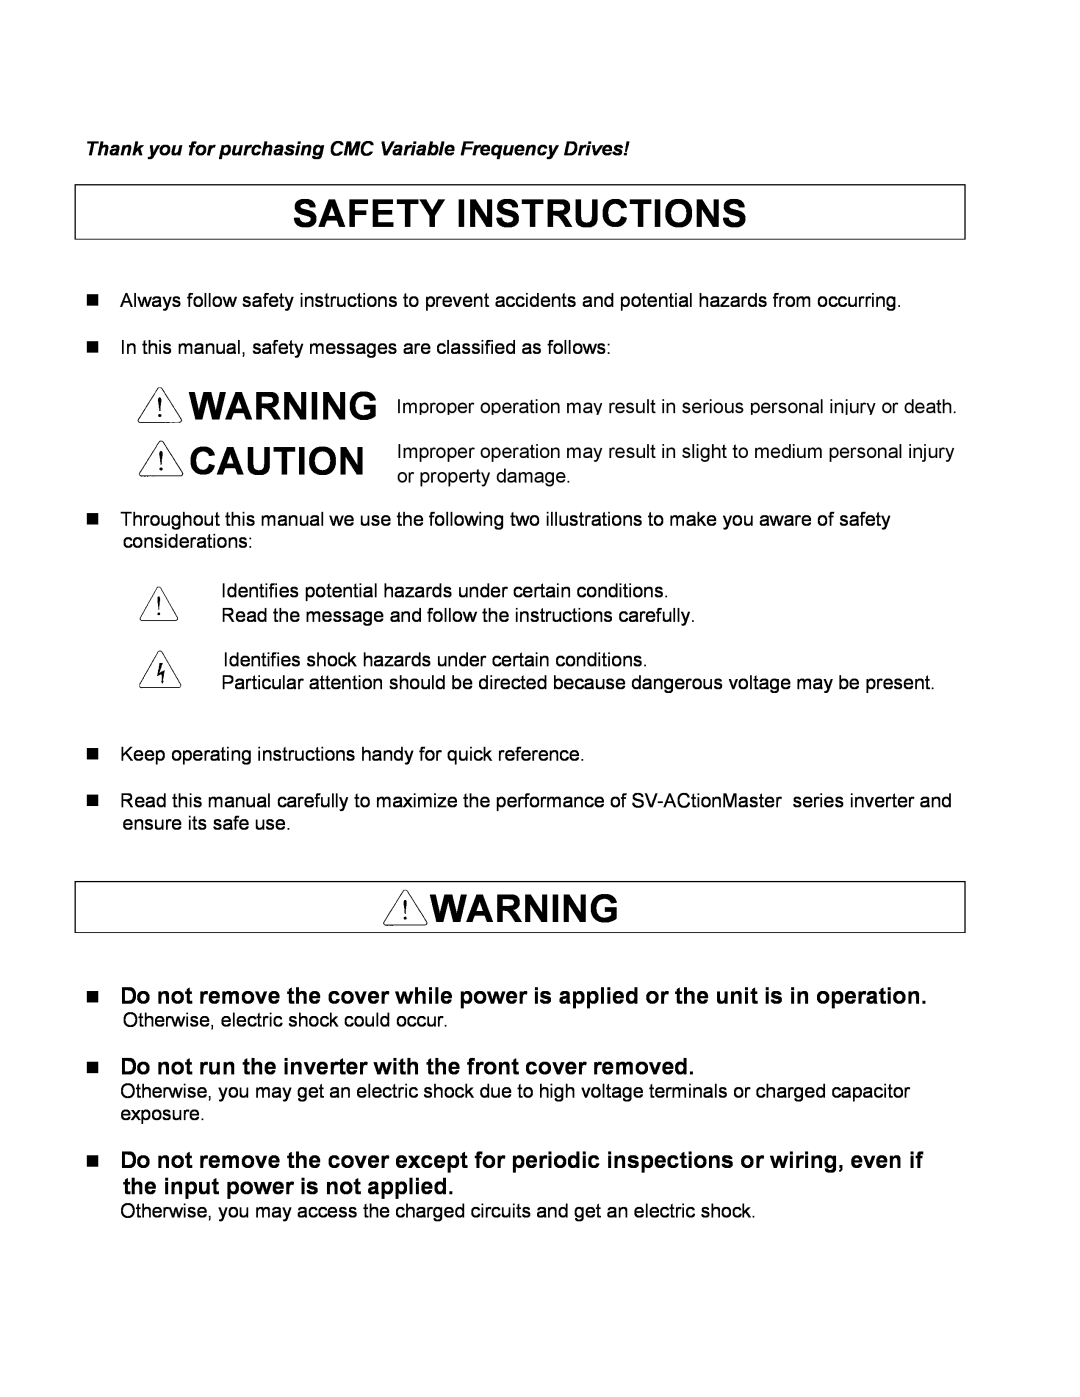 Cleveland Range inverter manual Safety Instructions 